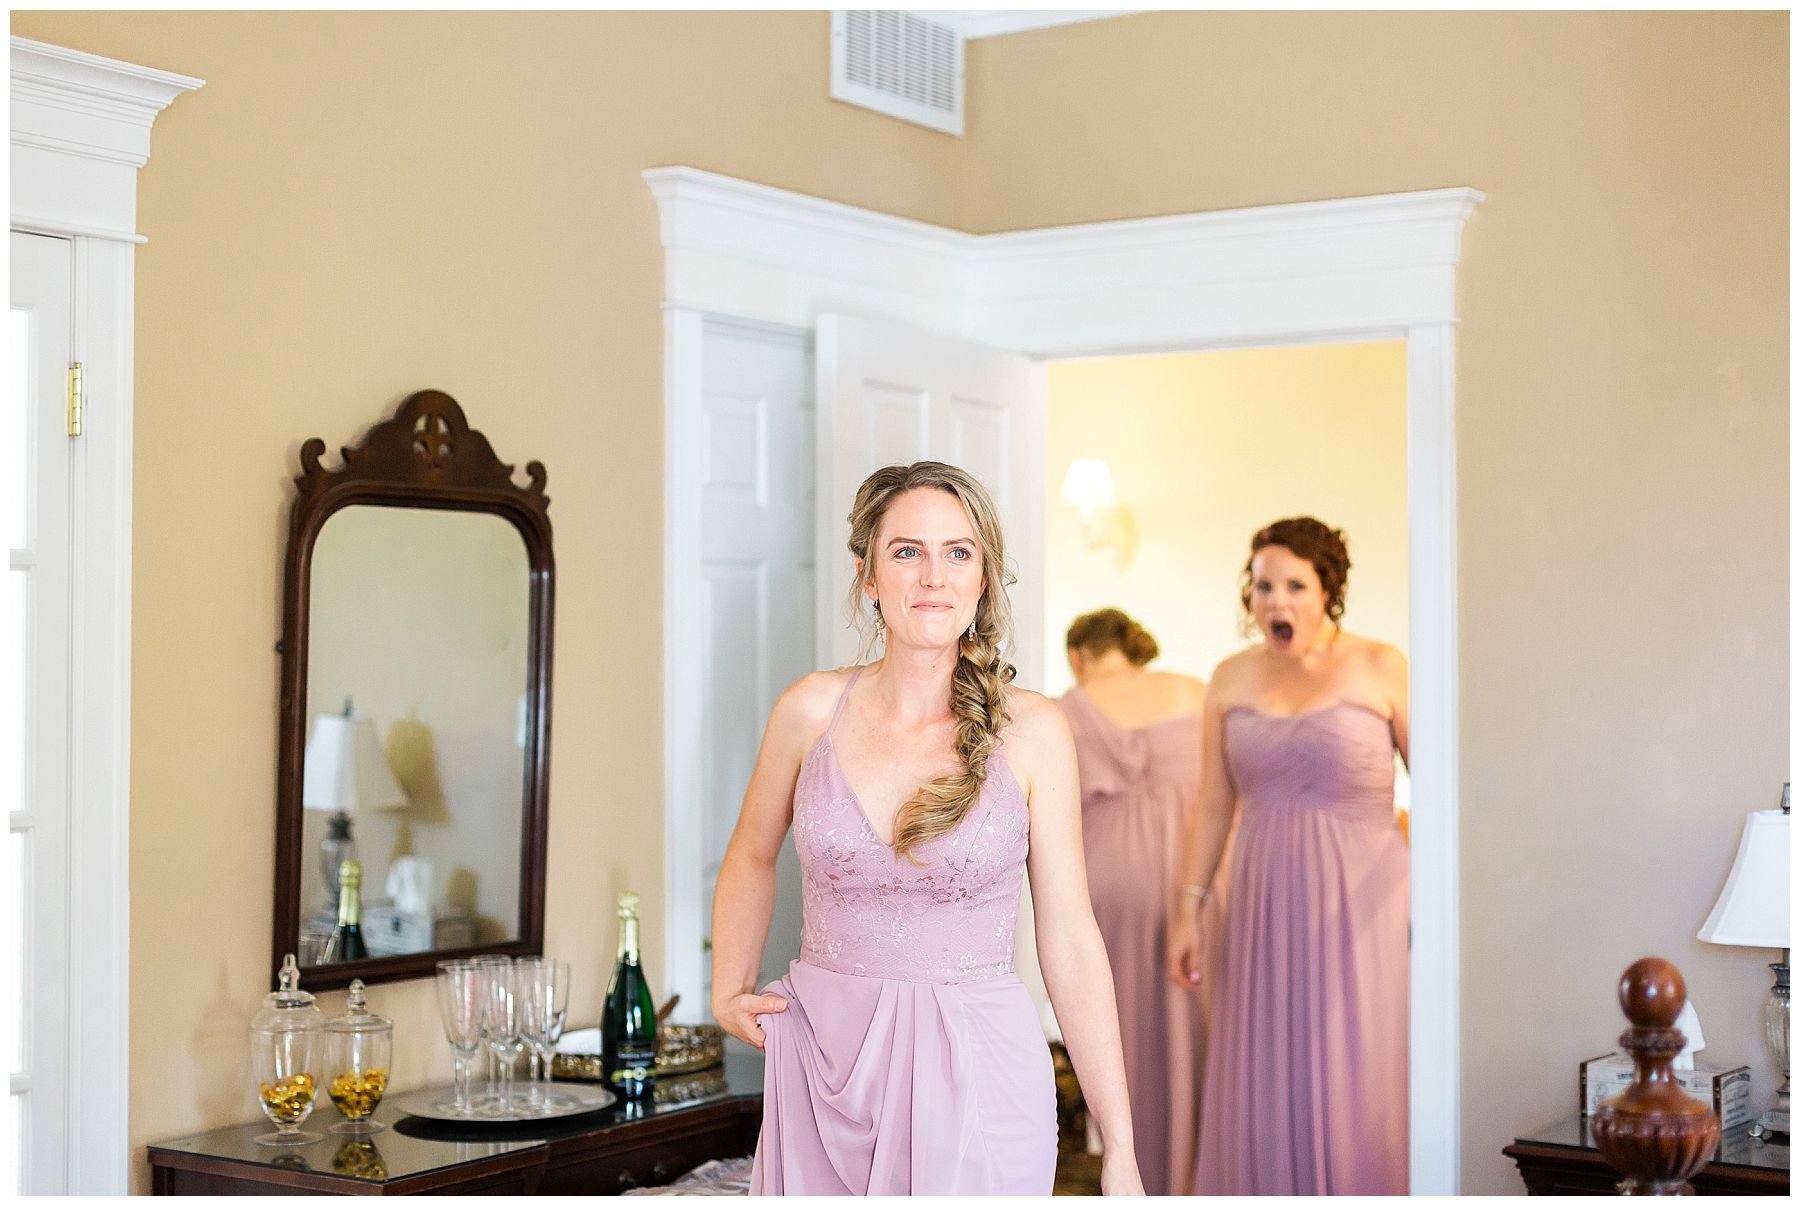 Lavender bridesmaids first look at bride